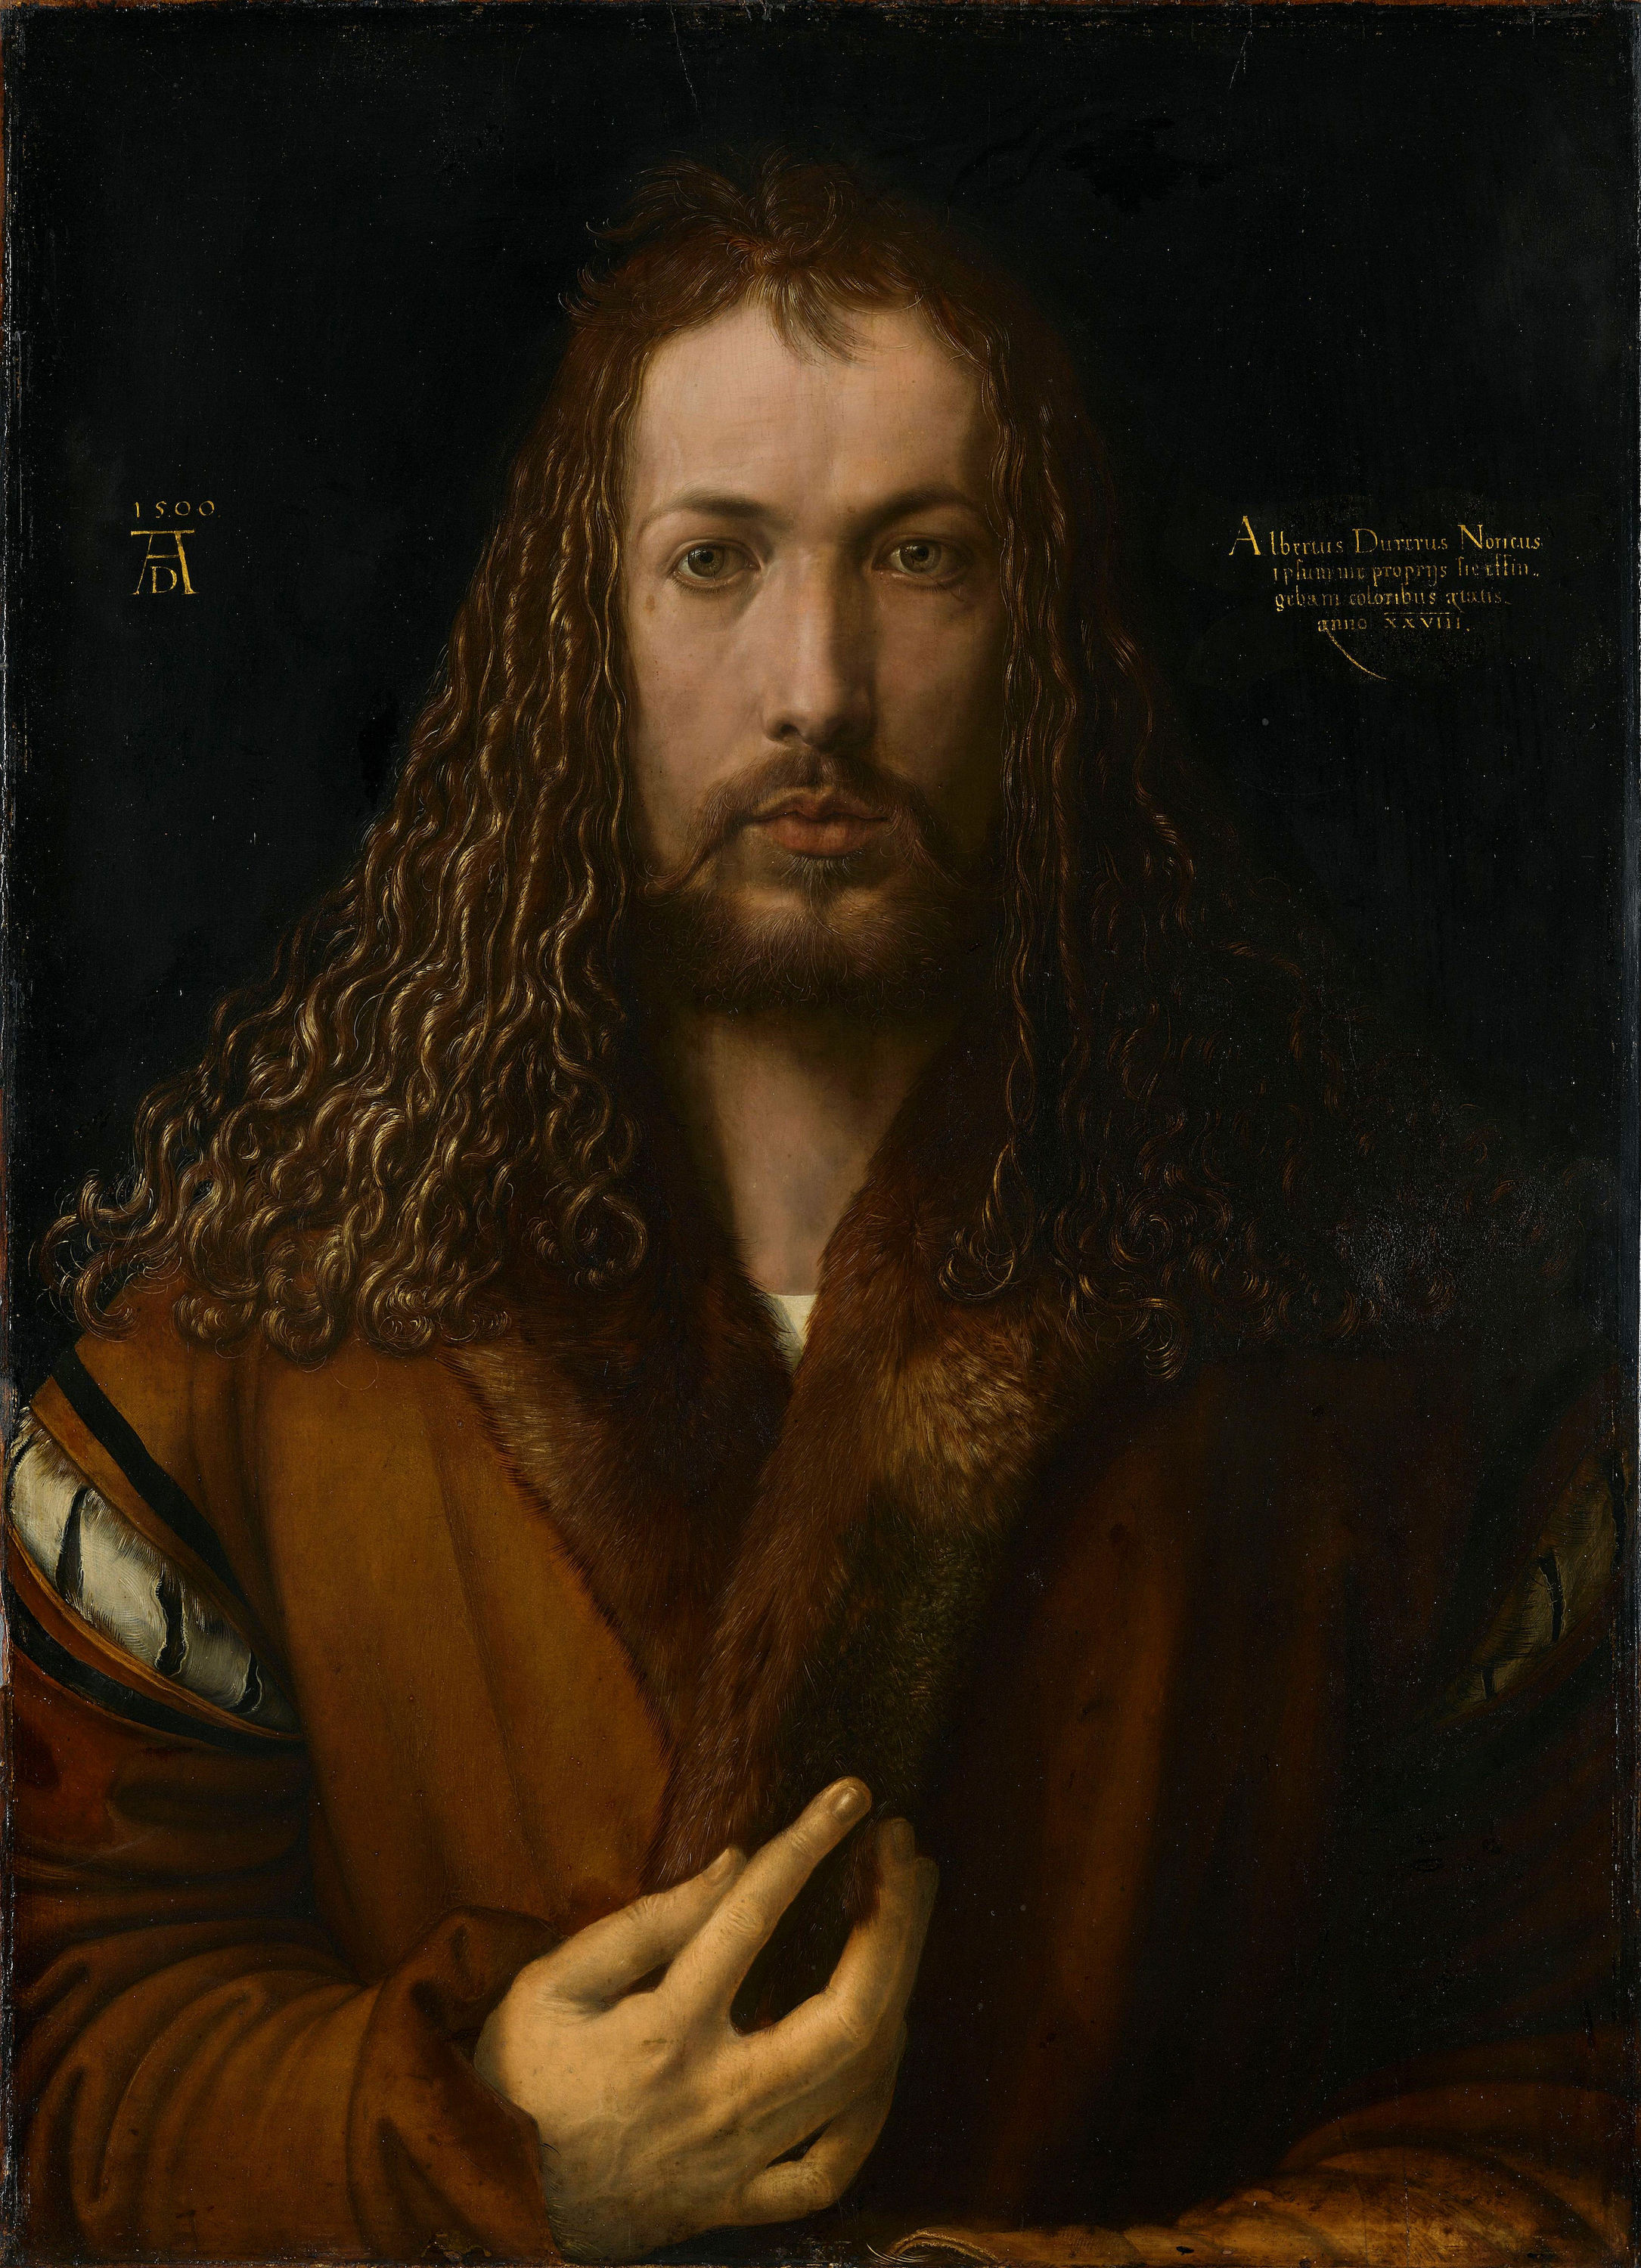 Autoportret by Albrecht Dürer - 1500 - 67.1 × 48.9 cm 